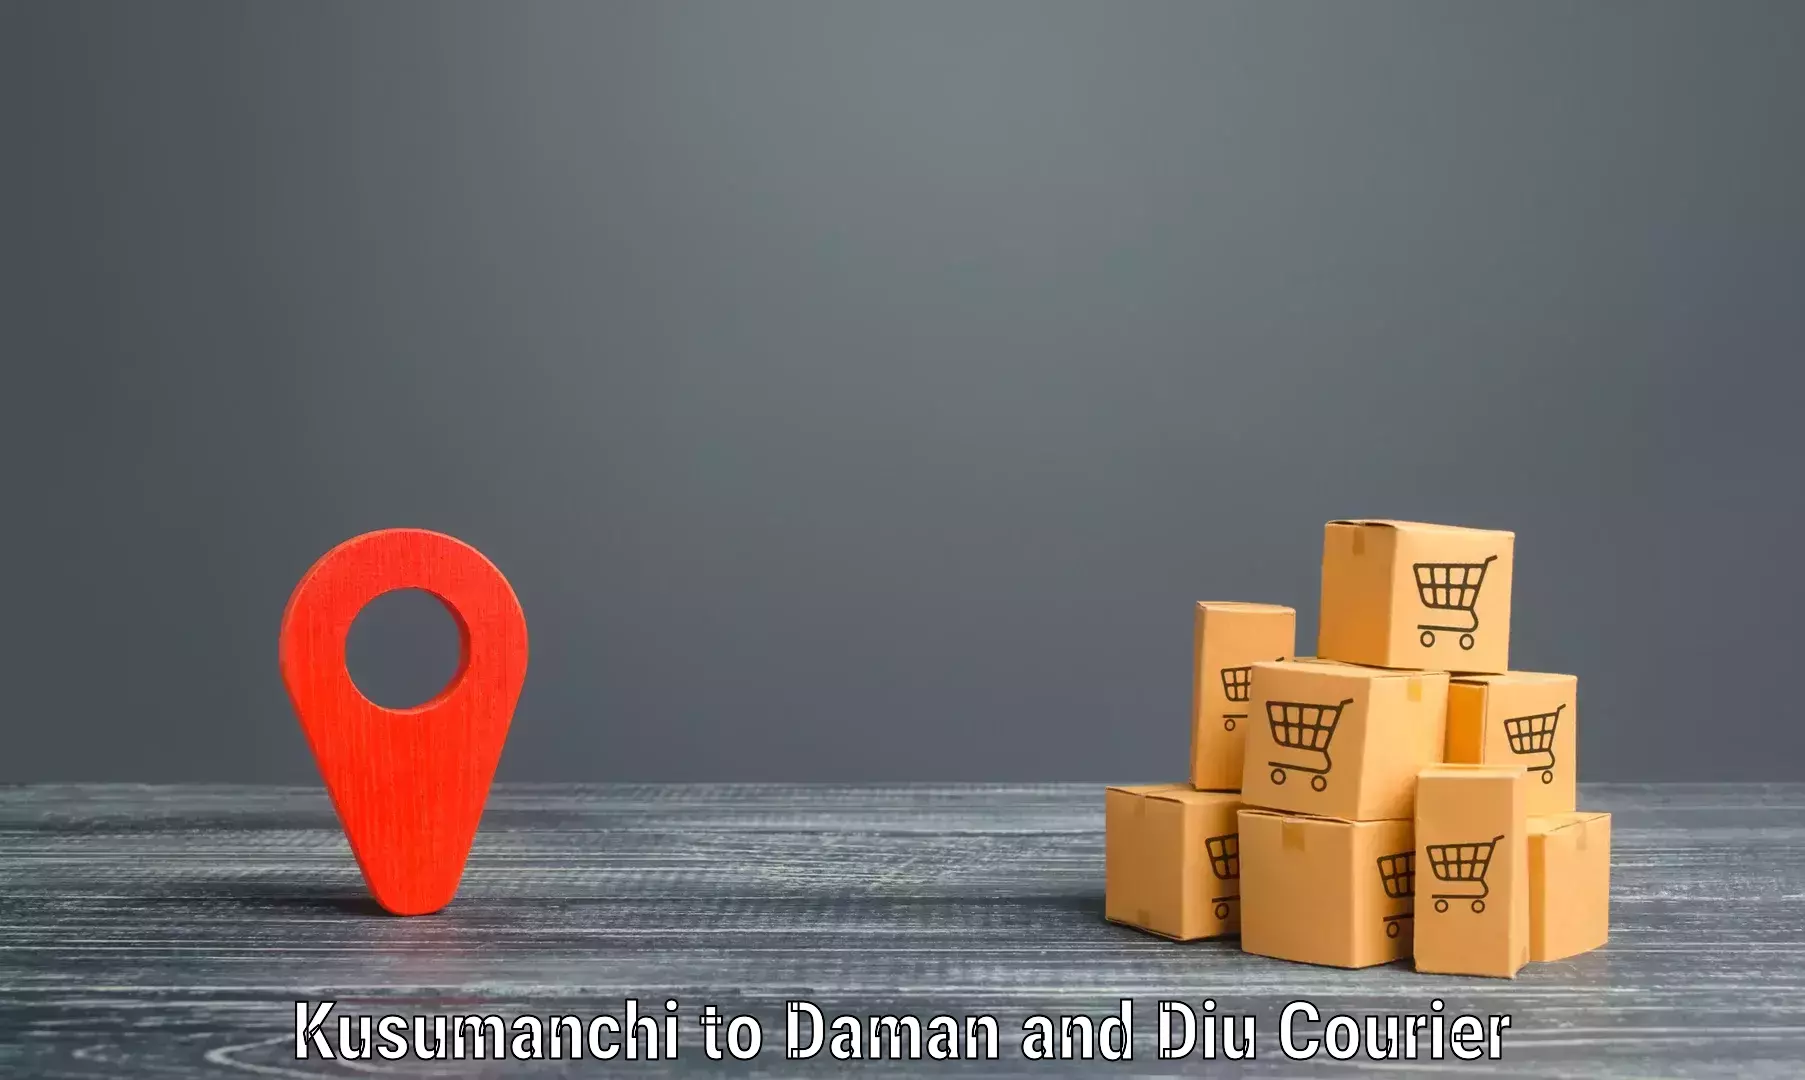 Professional courier handling Kusumanchi to Daman and Diu